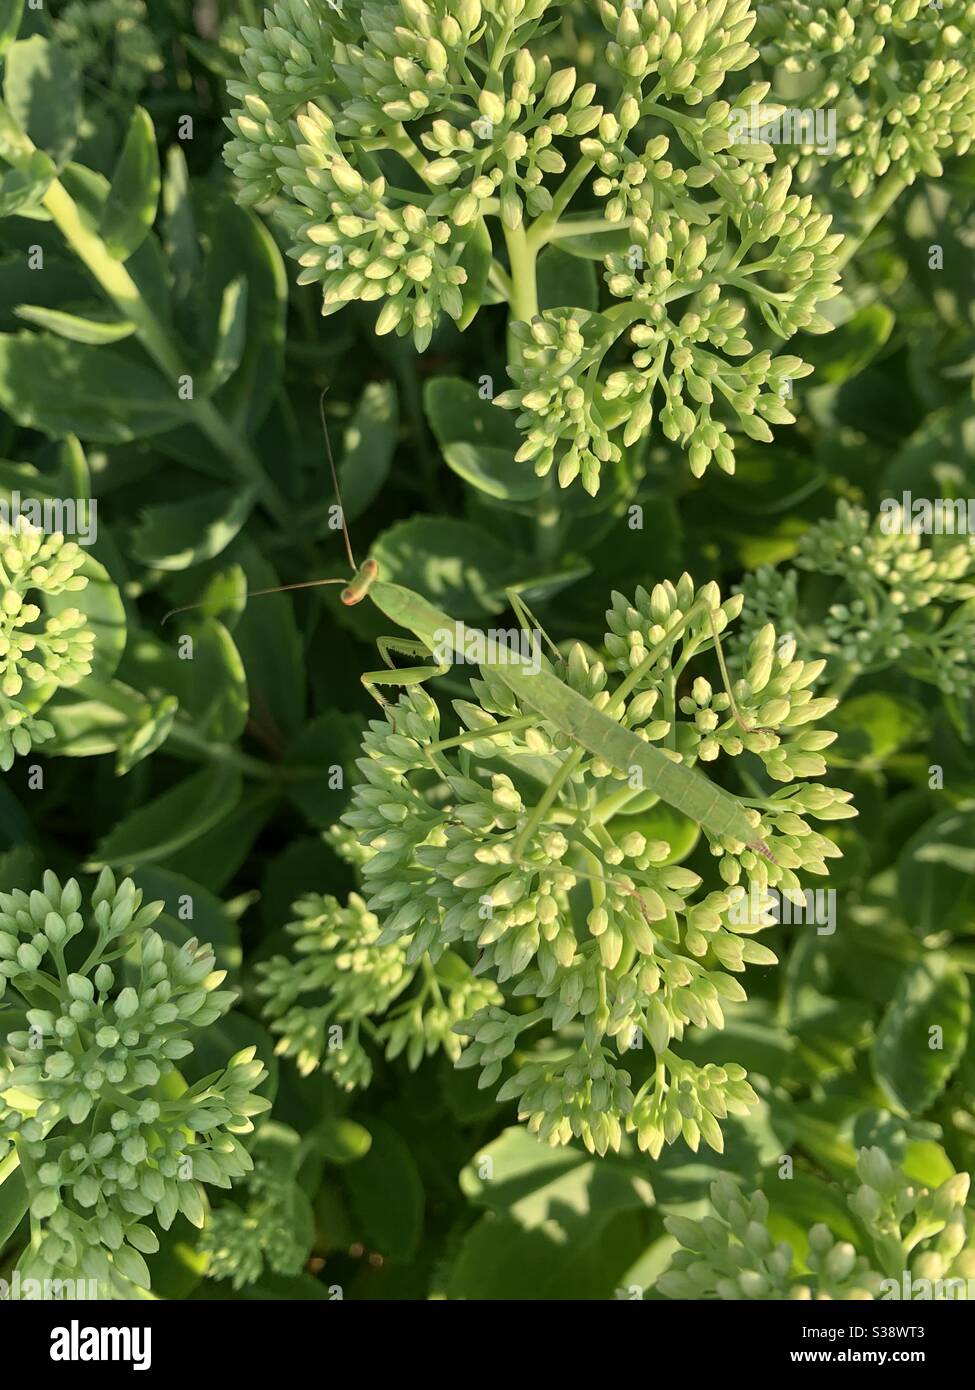 Green praying mantis on green stonecrop sedum buds Stock Photo